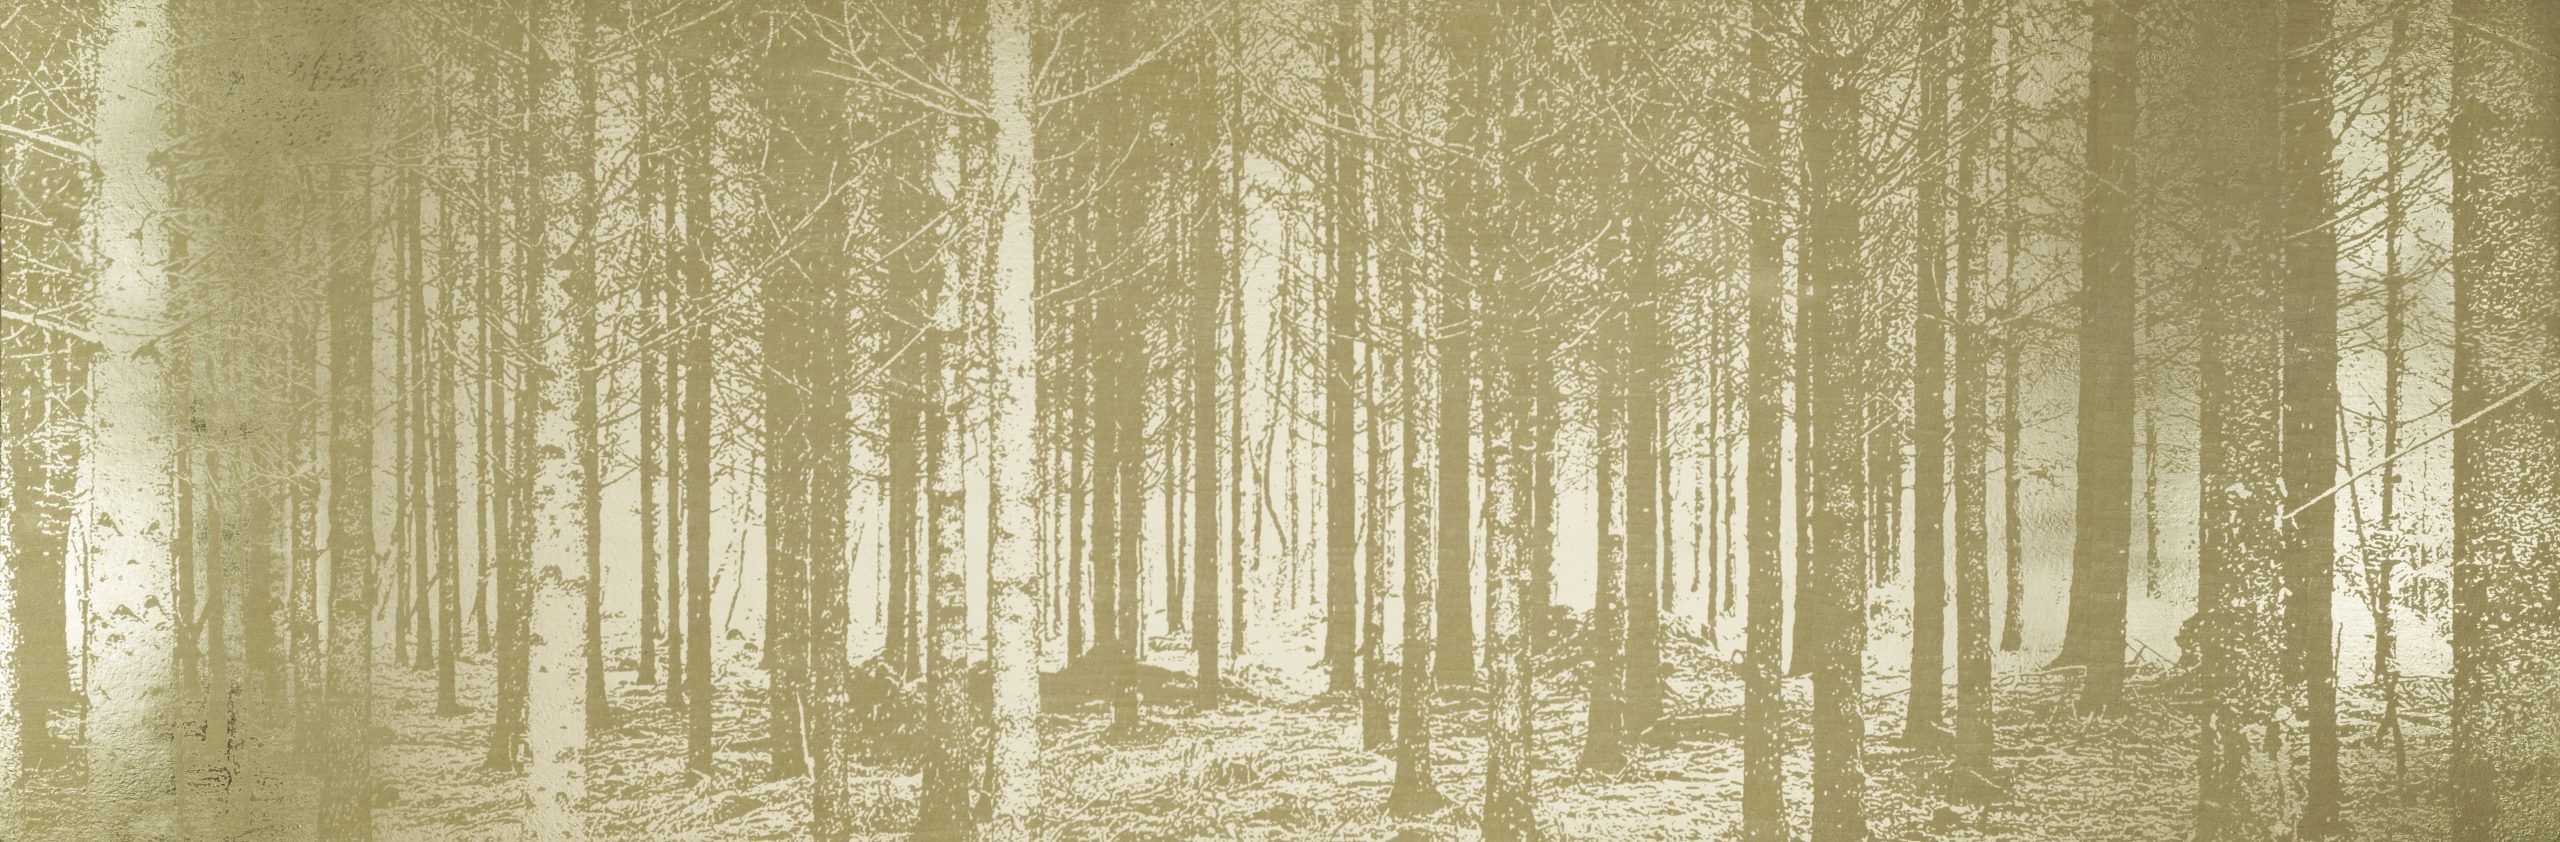 Hermann Staudinger, Wald, Dezember 2022, Blattgold auf Holz, 45 x 135 cm, 2022